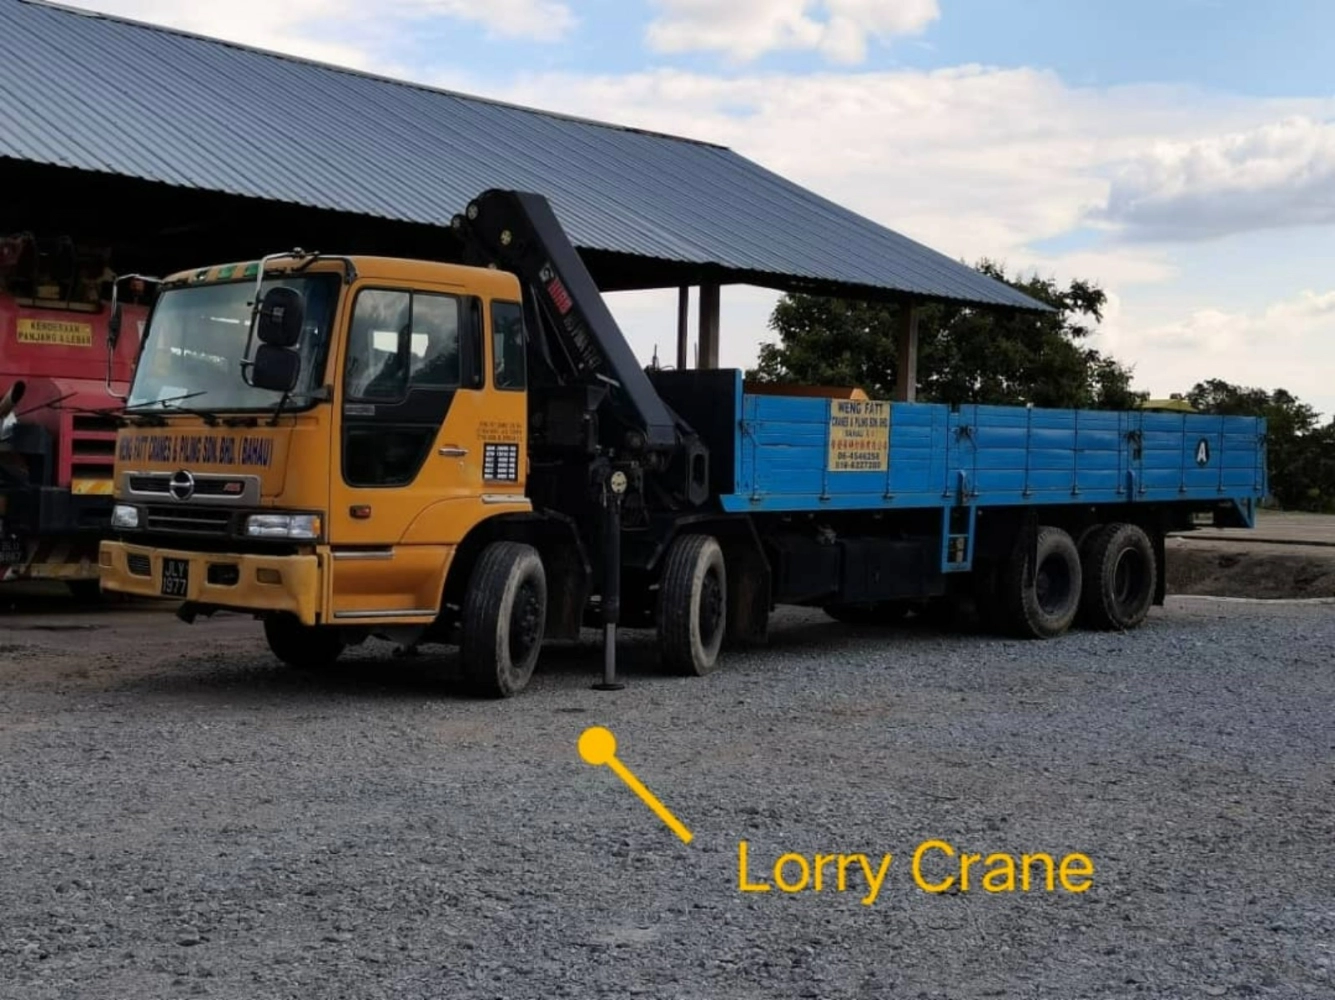 Lorry Crane